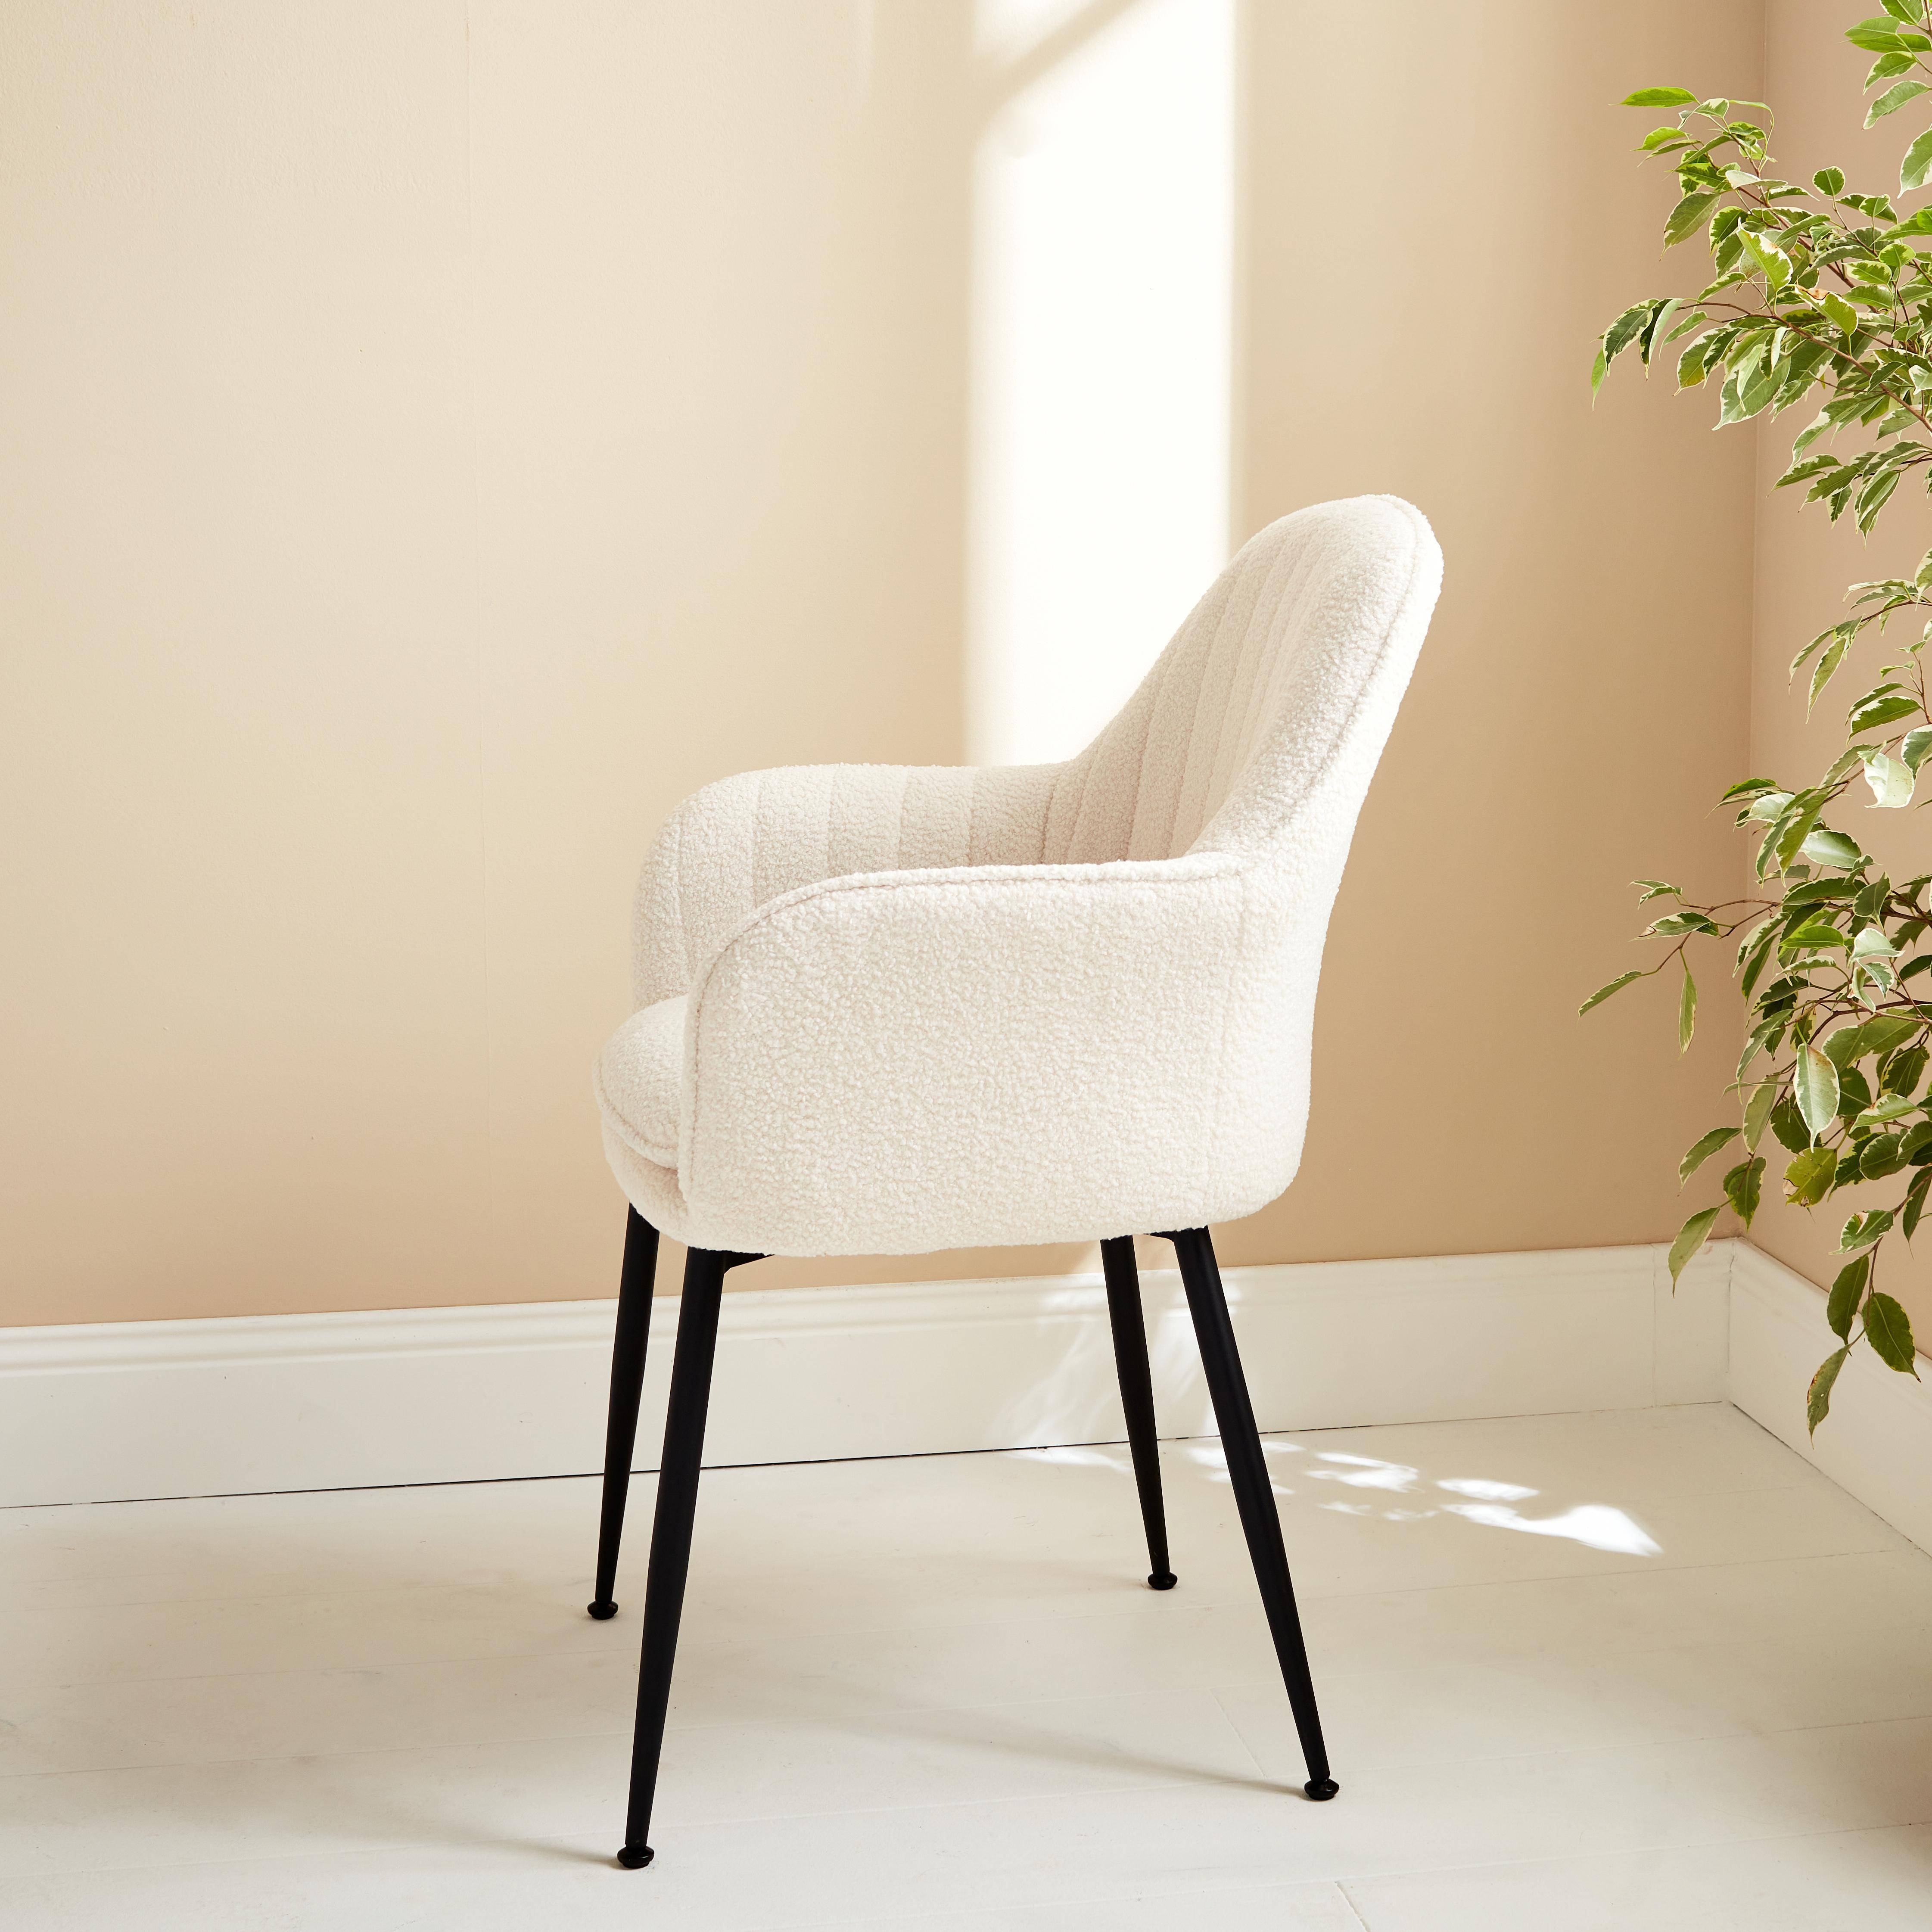 Boucle armchair with metal legs, 58x58x85cm - Shella Boucle - White,sweeek,Photo2